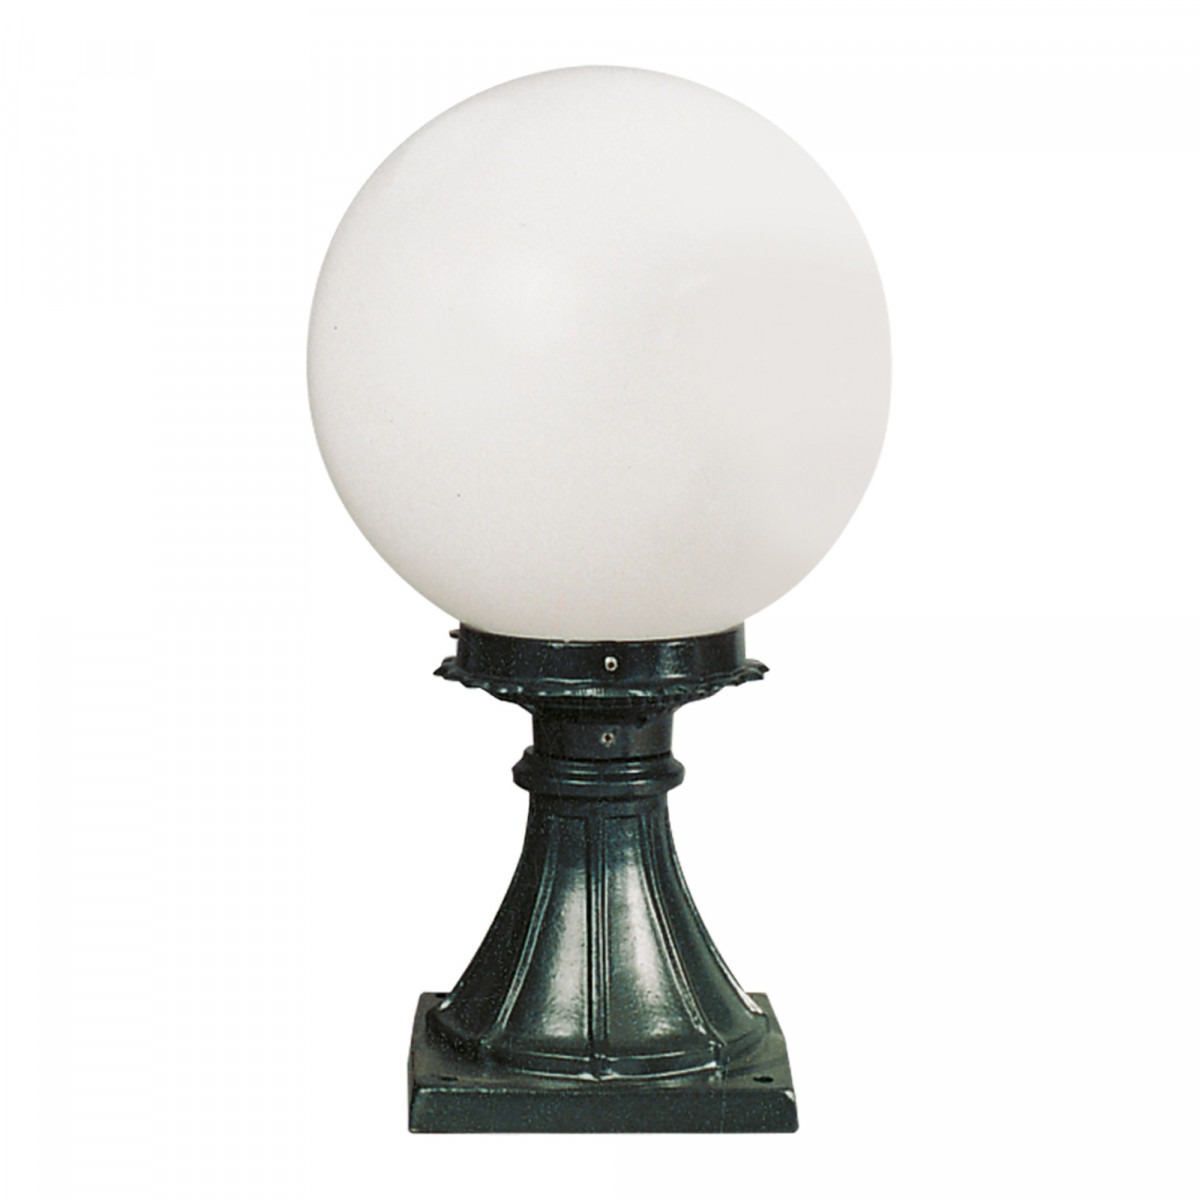 Pedestal globe light R 224 